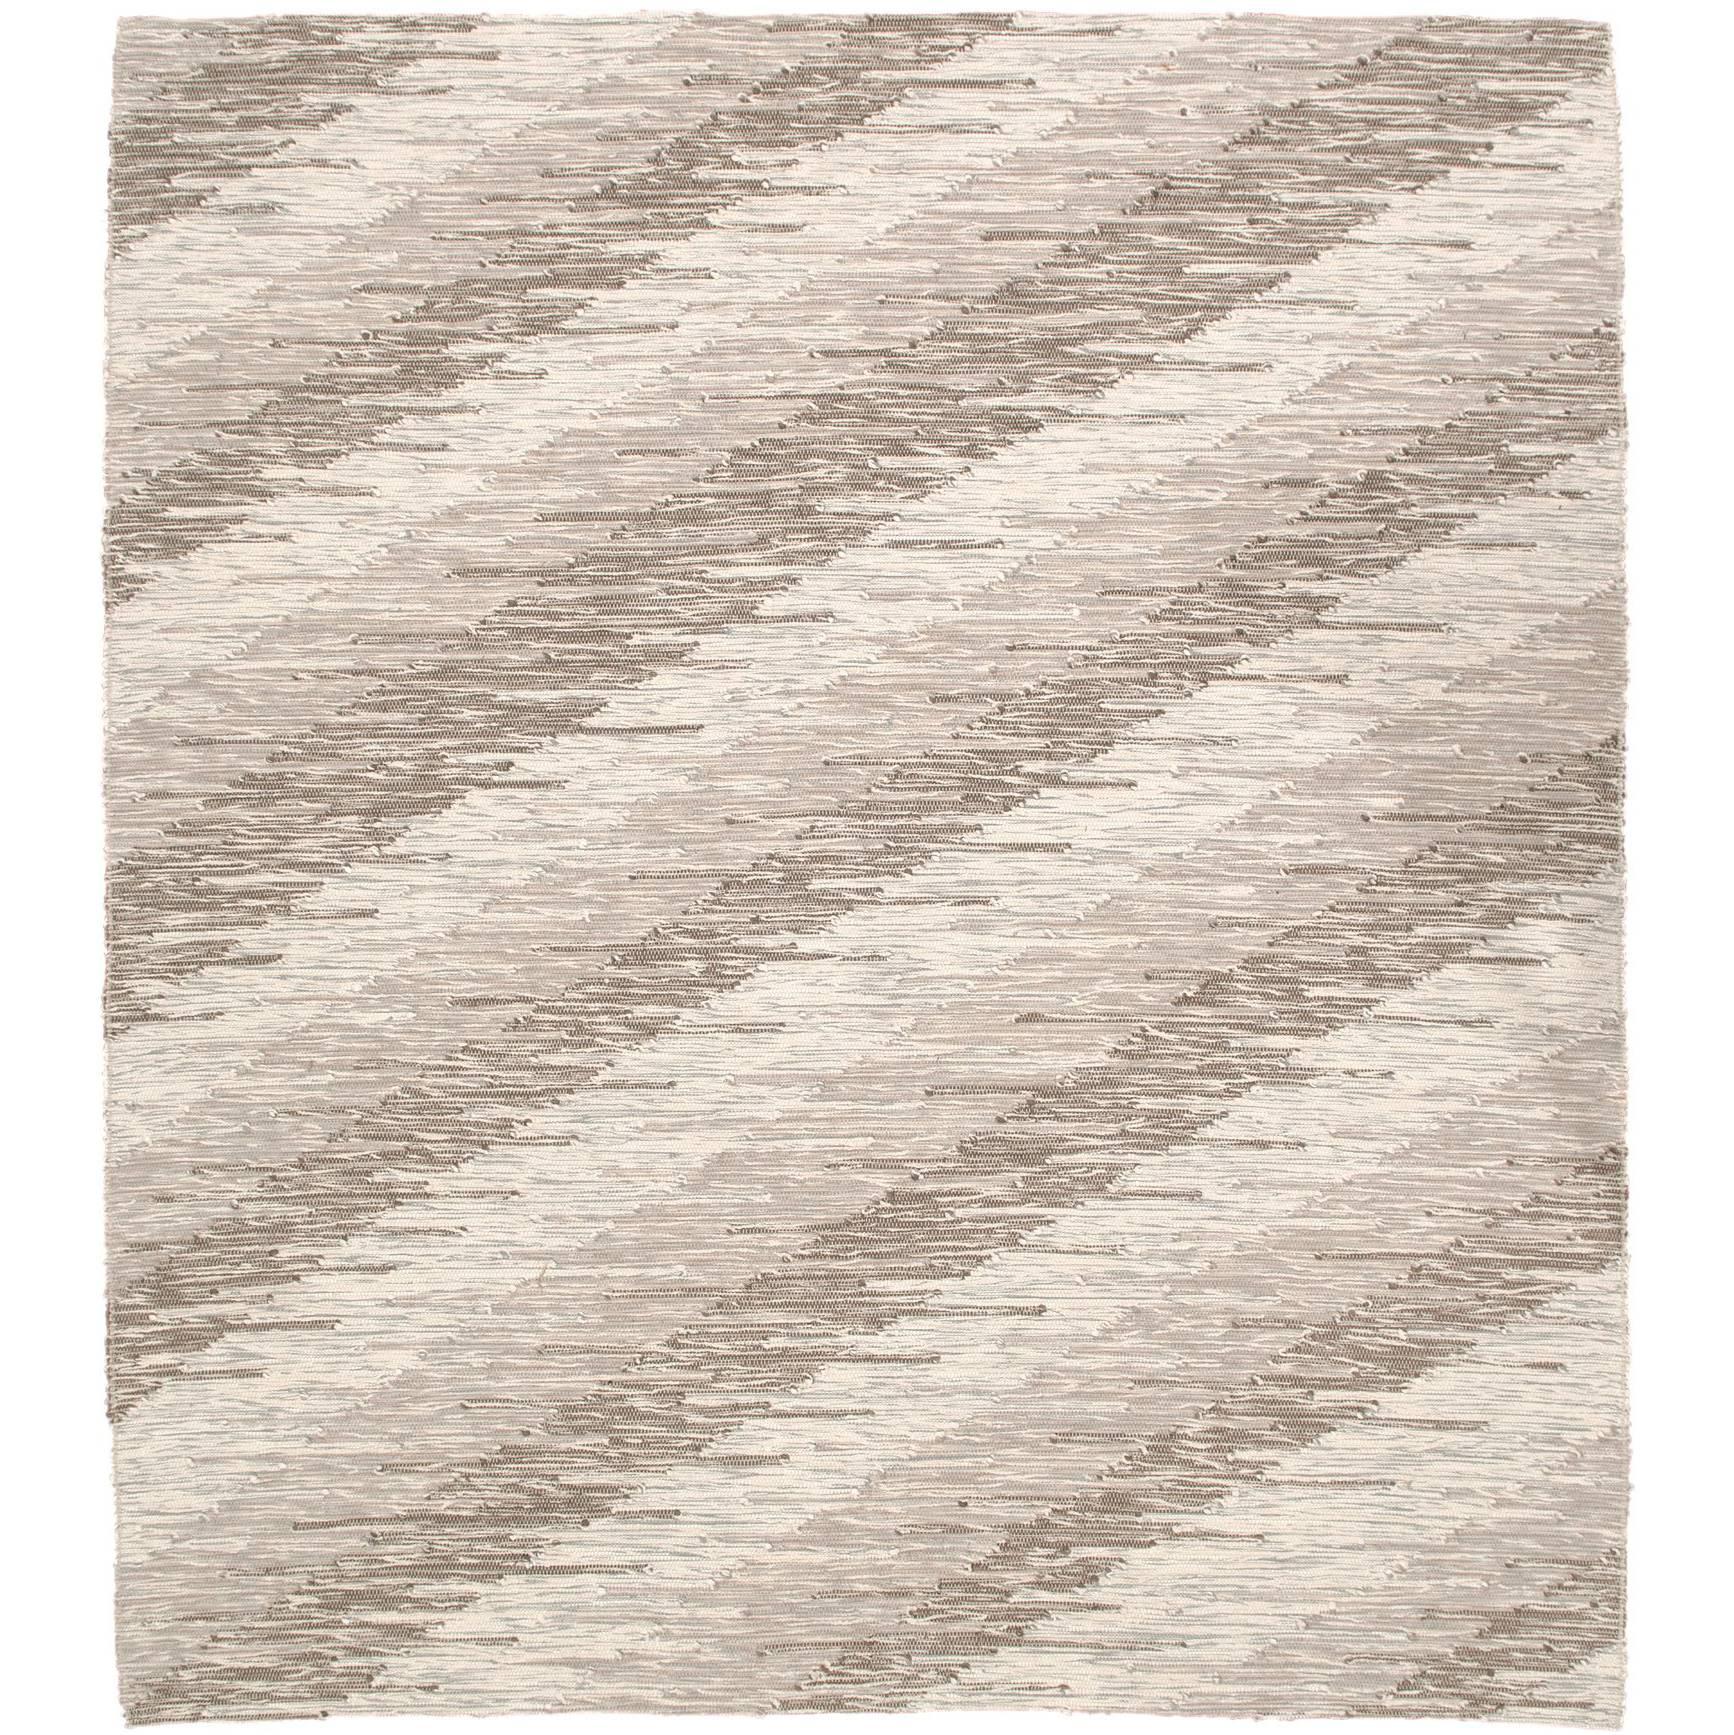 Contemporary Italian ‘Intreccio Diagonale’ Carpet, Beige 2